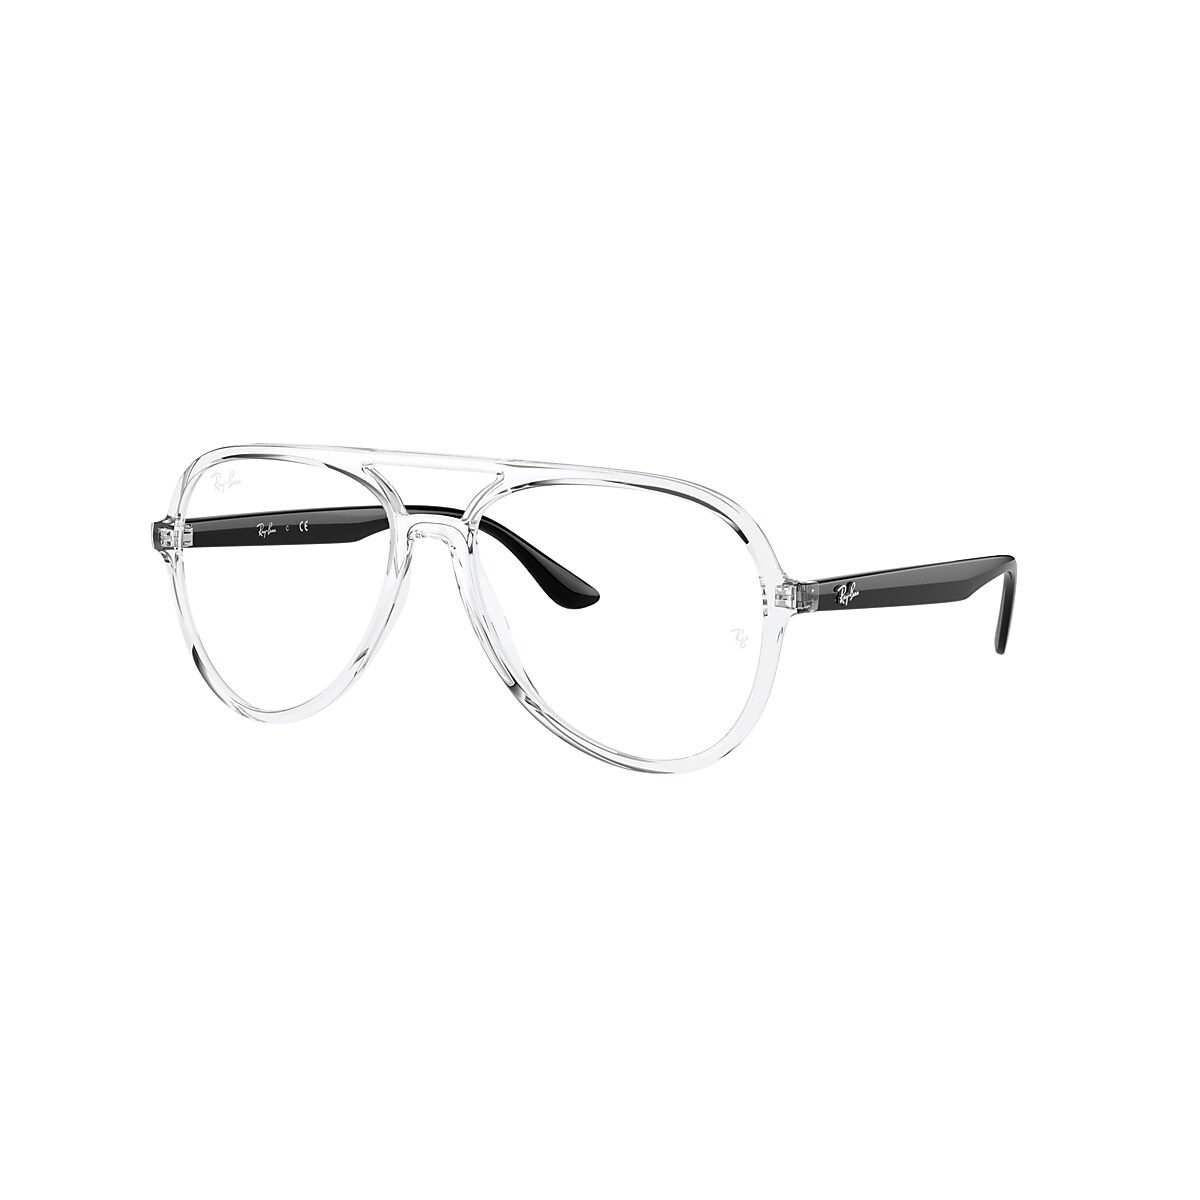 RB4376V OPTICS Eyeglasses with Transparent Frame - RB4376V